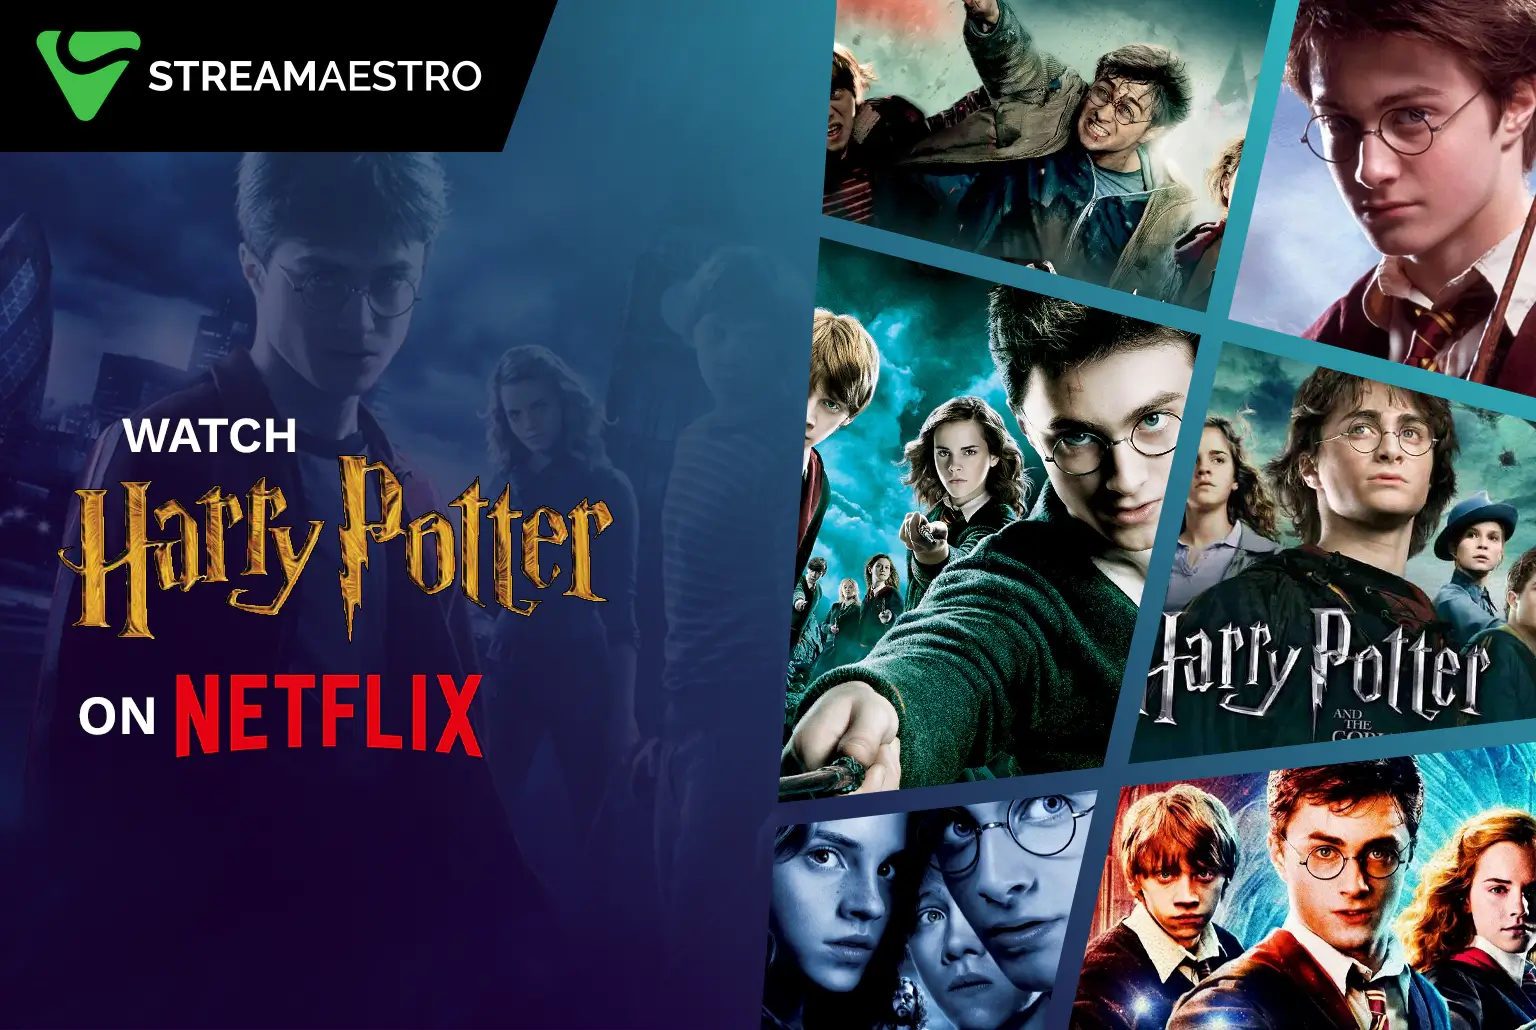 Watch Harry Potter on Netflix